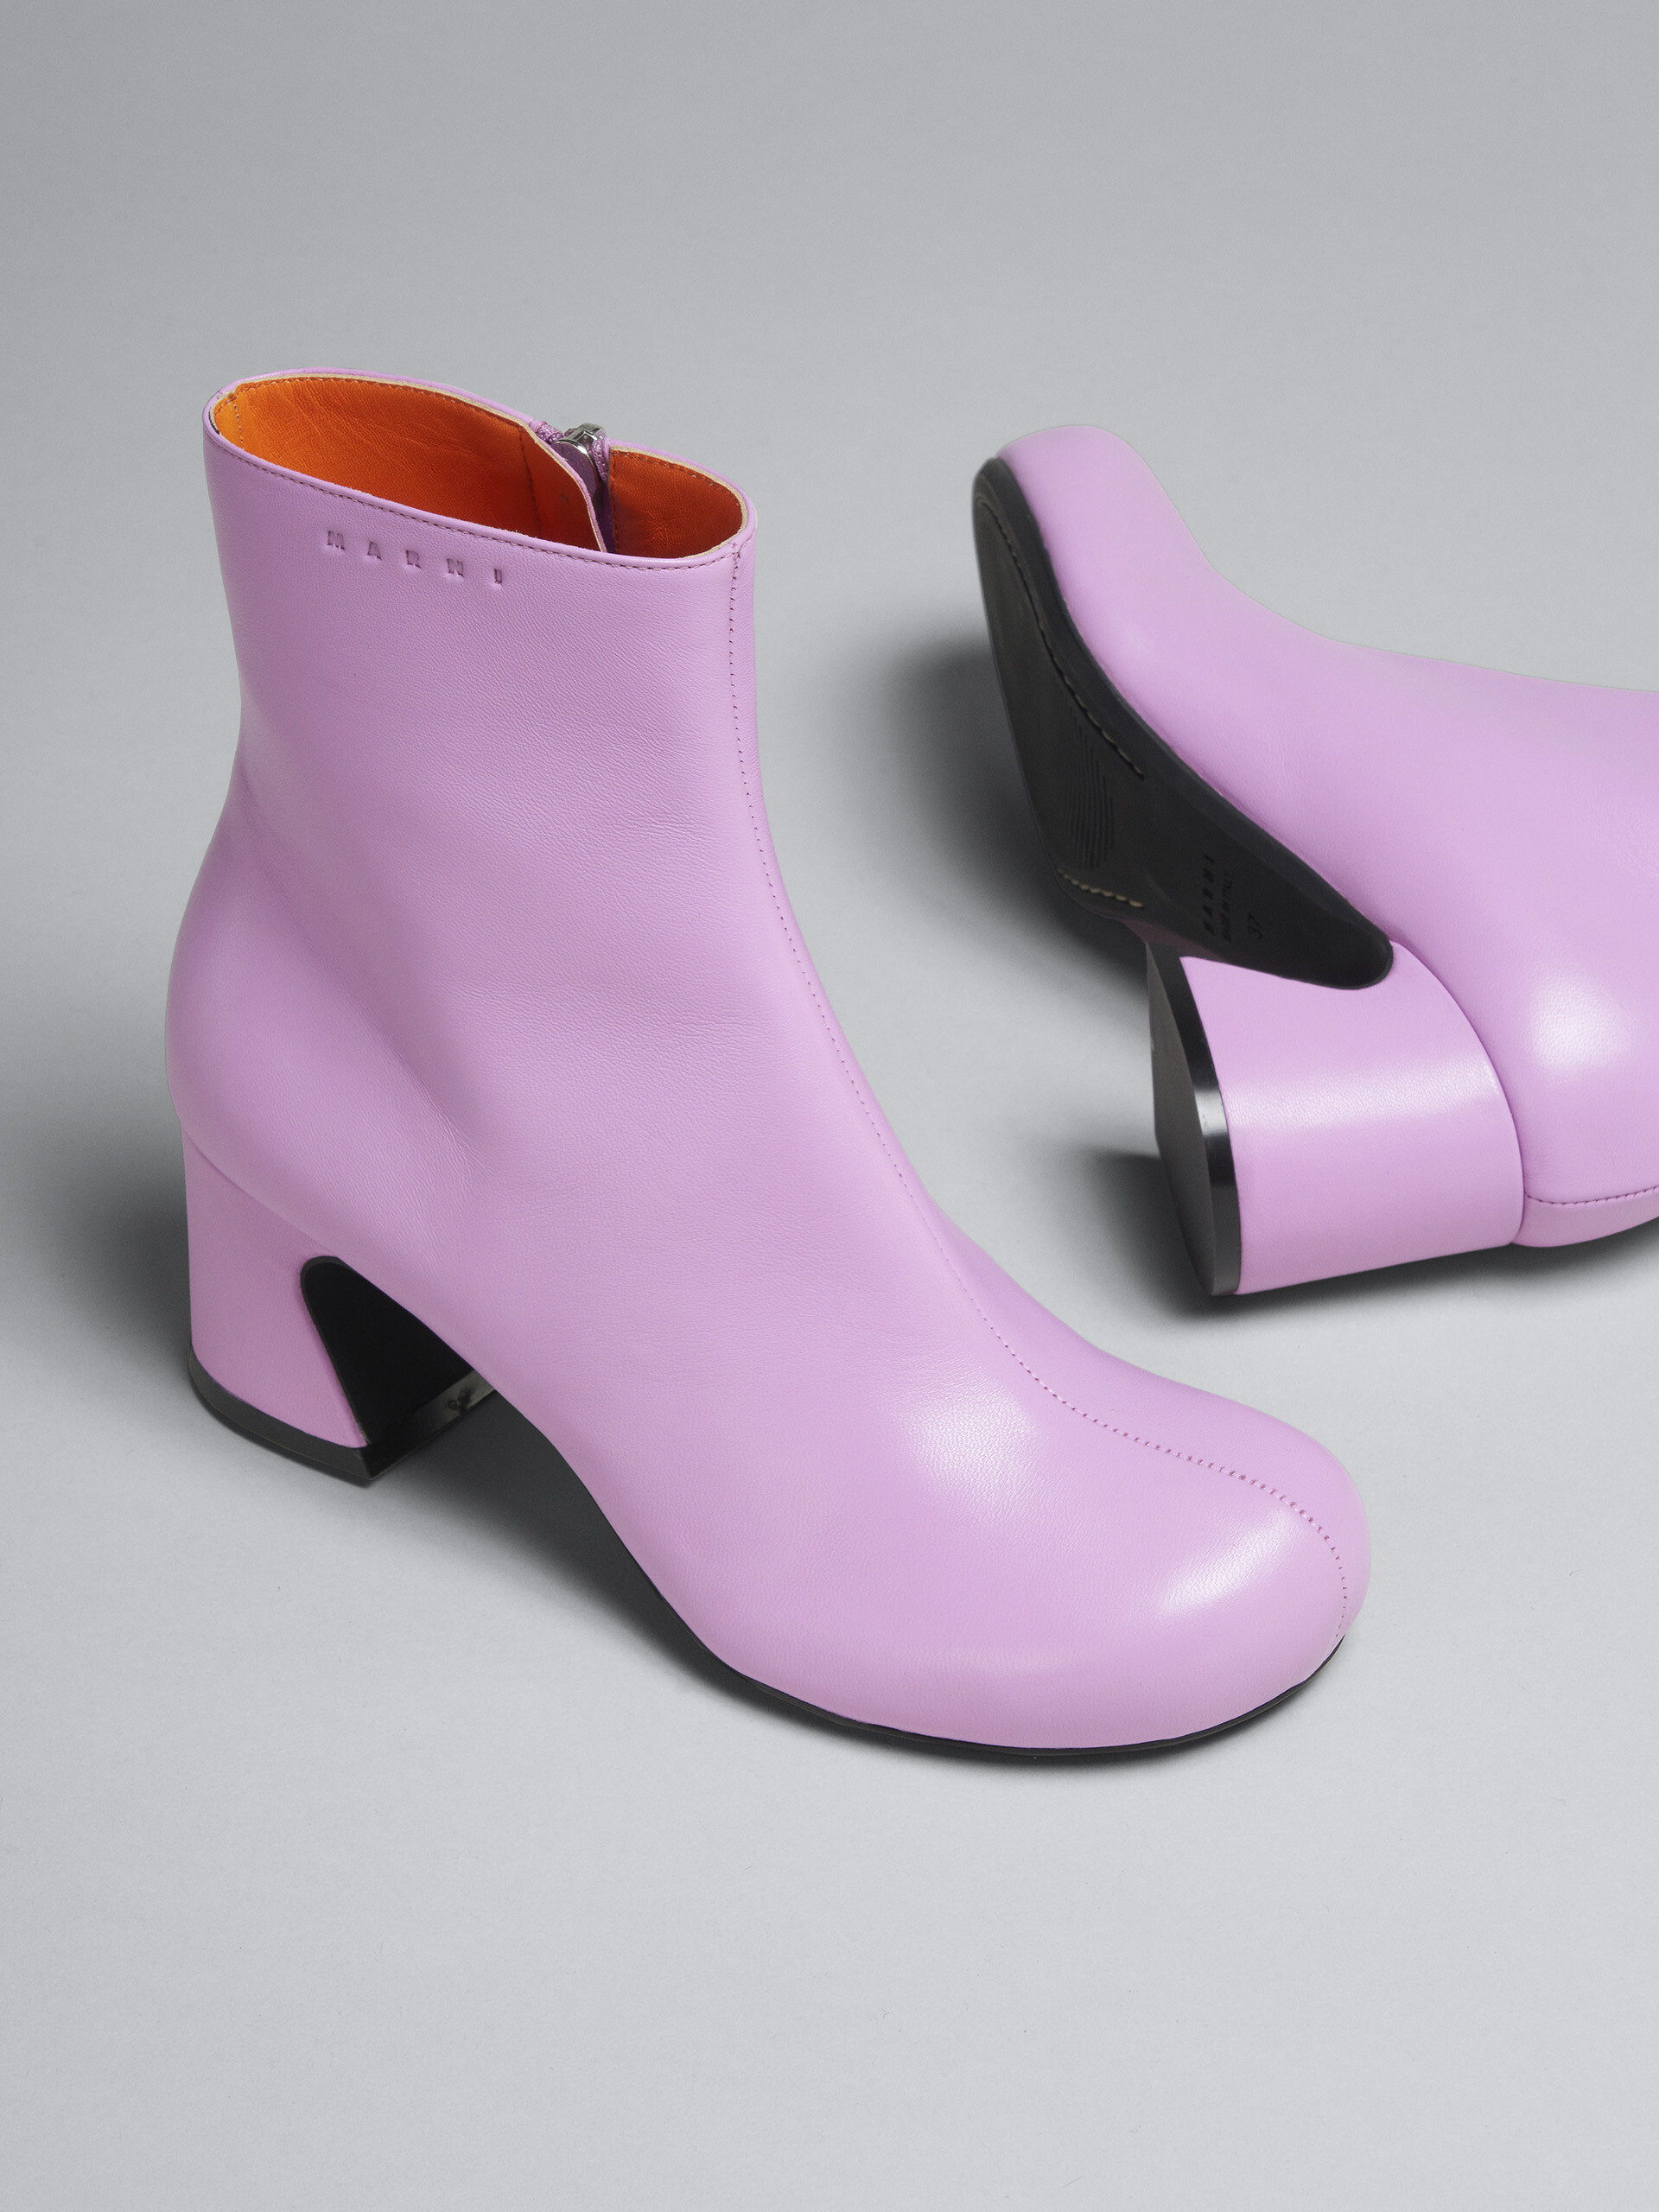 Stiefeletten aus rosafarbenem Leder - Stiefel - Image 4